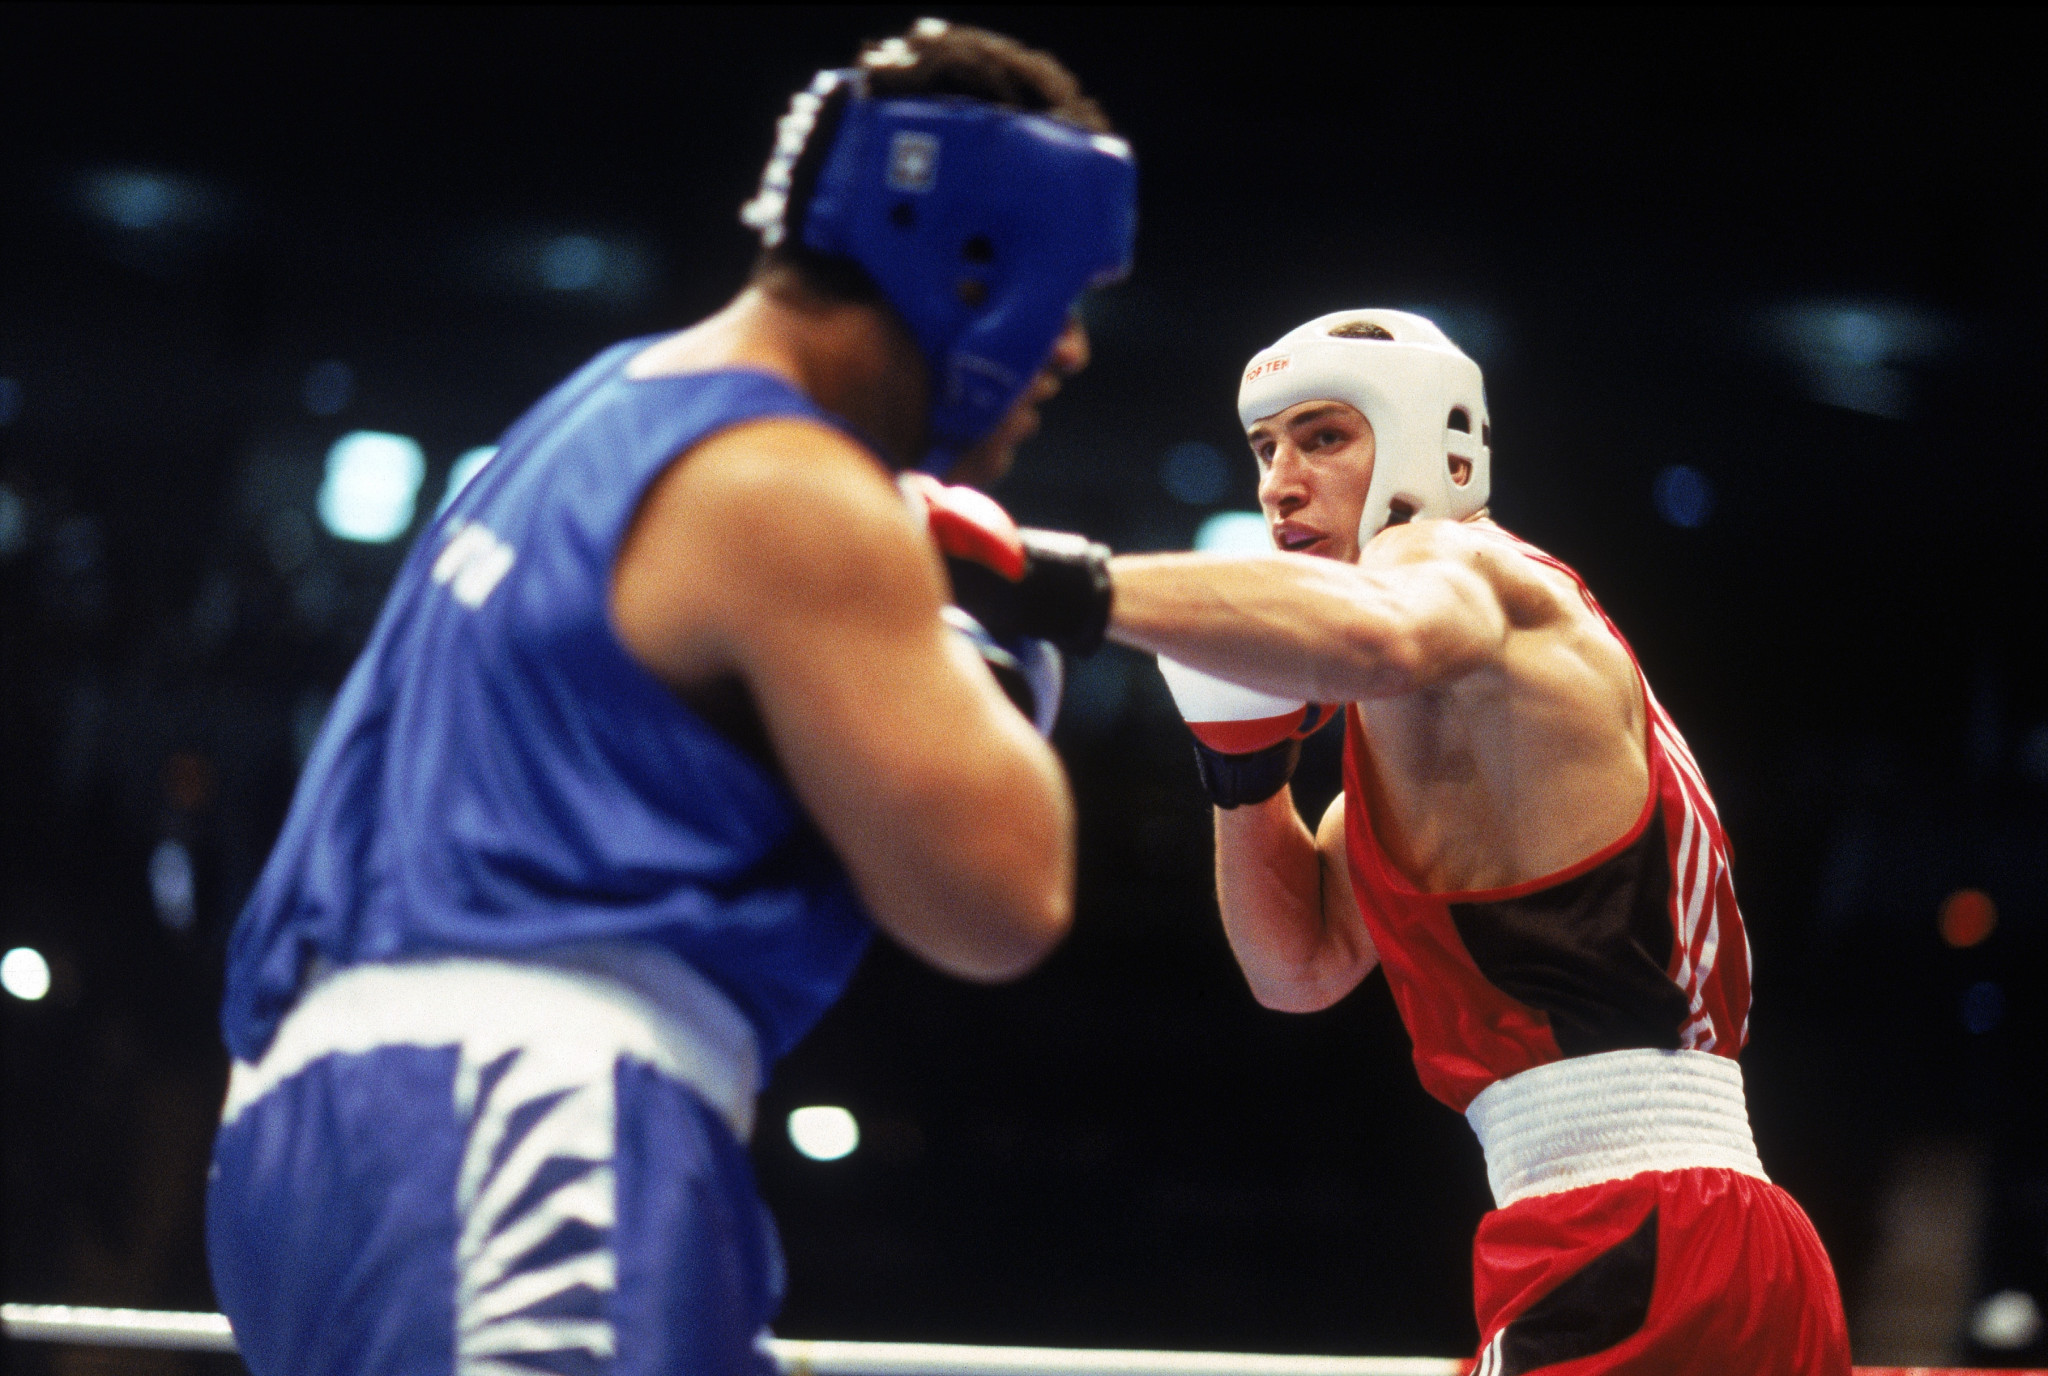 Wladimir Klitschko was the Atlanta 1996 super-heavyweight boxing champion ©Getty Images